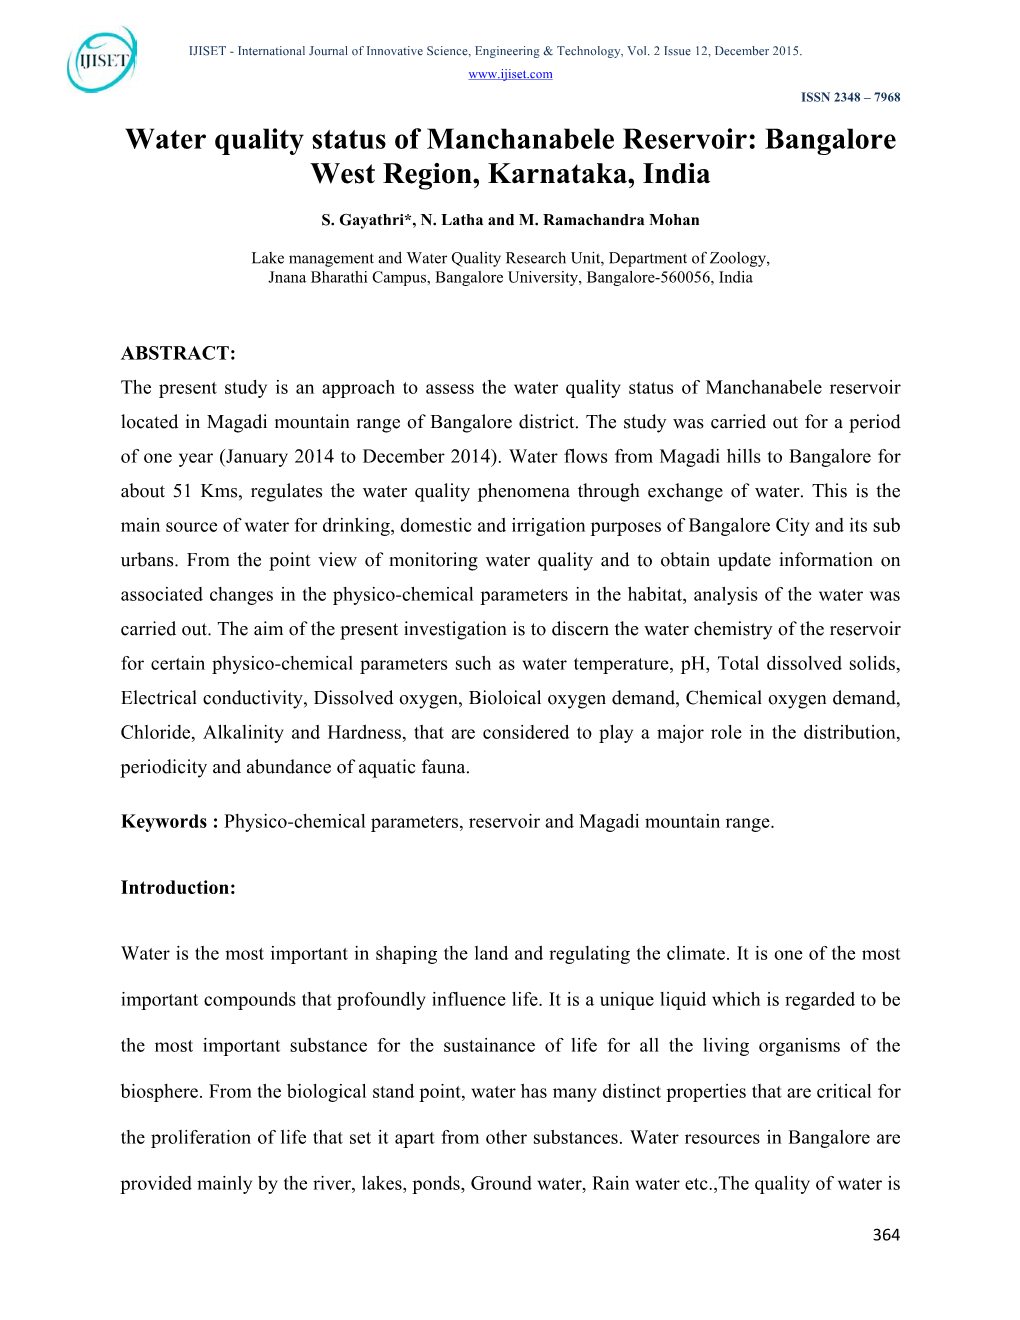 Water Quality Status of Manchanabele Reservoir: Bangalore West Region, Karnataka, India